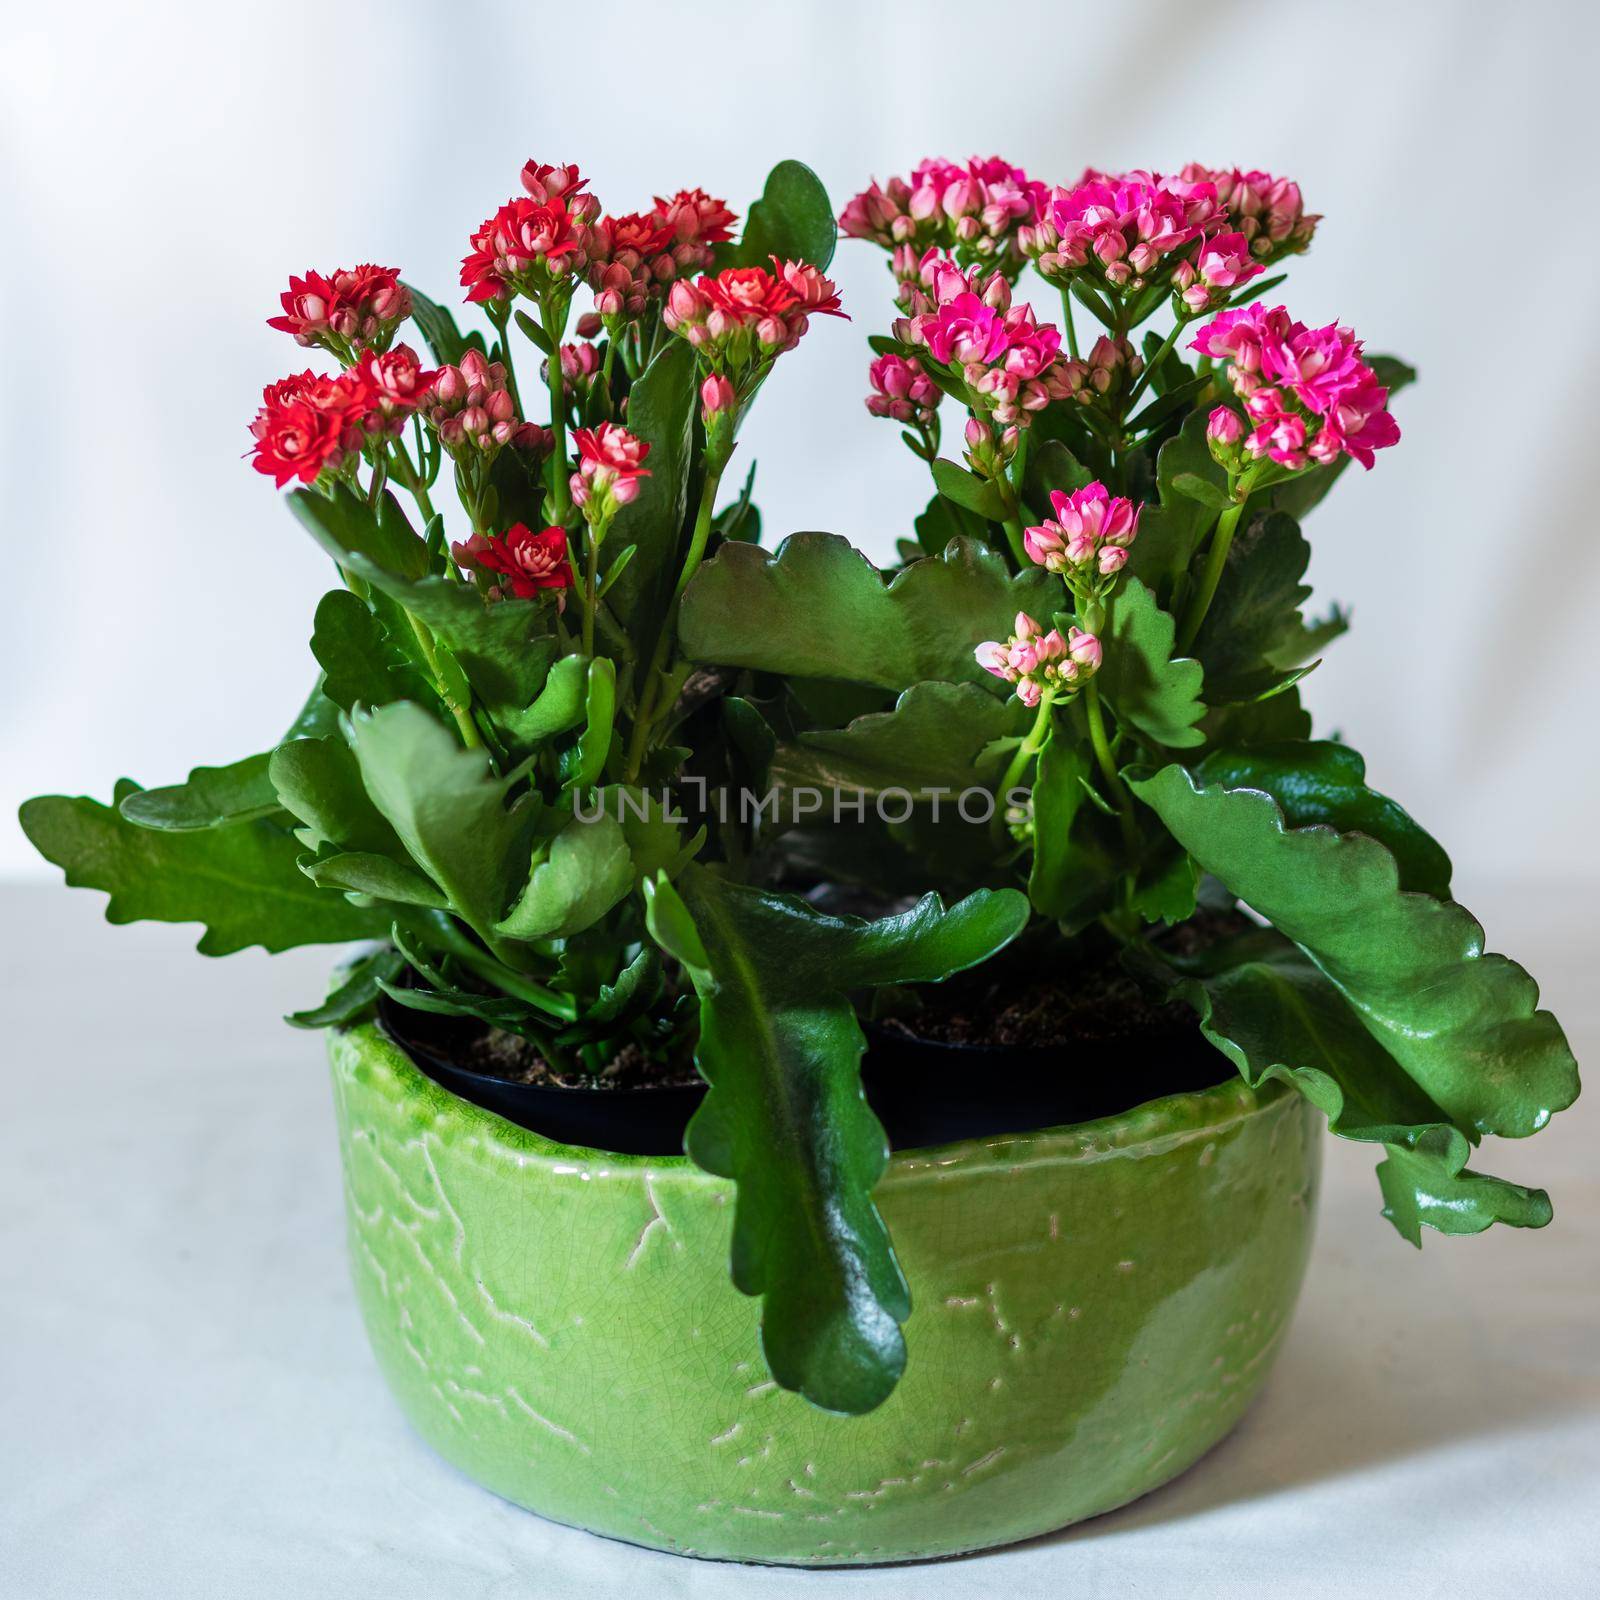 Colorful Lantana camara flower plant in the green pot